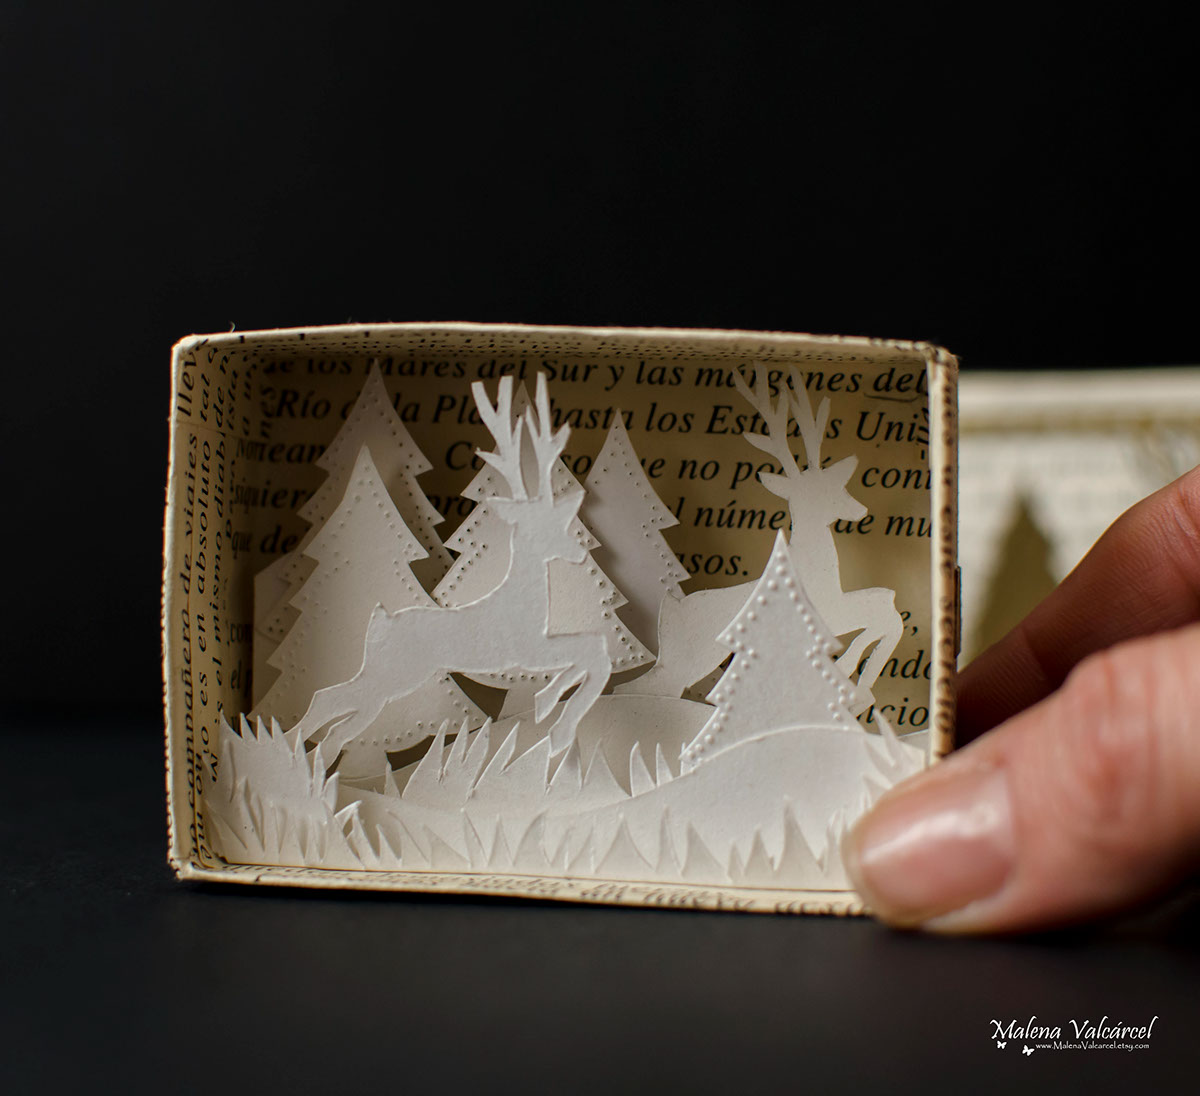 matchbox art paper christmas paper art paper art spain sculpture Diorama paper diorama art with paper matchbox diorama Miniature Arte con Papel papel Malena Valcarcel